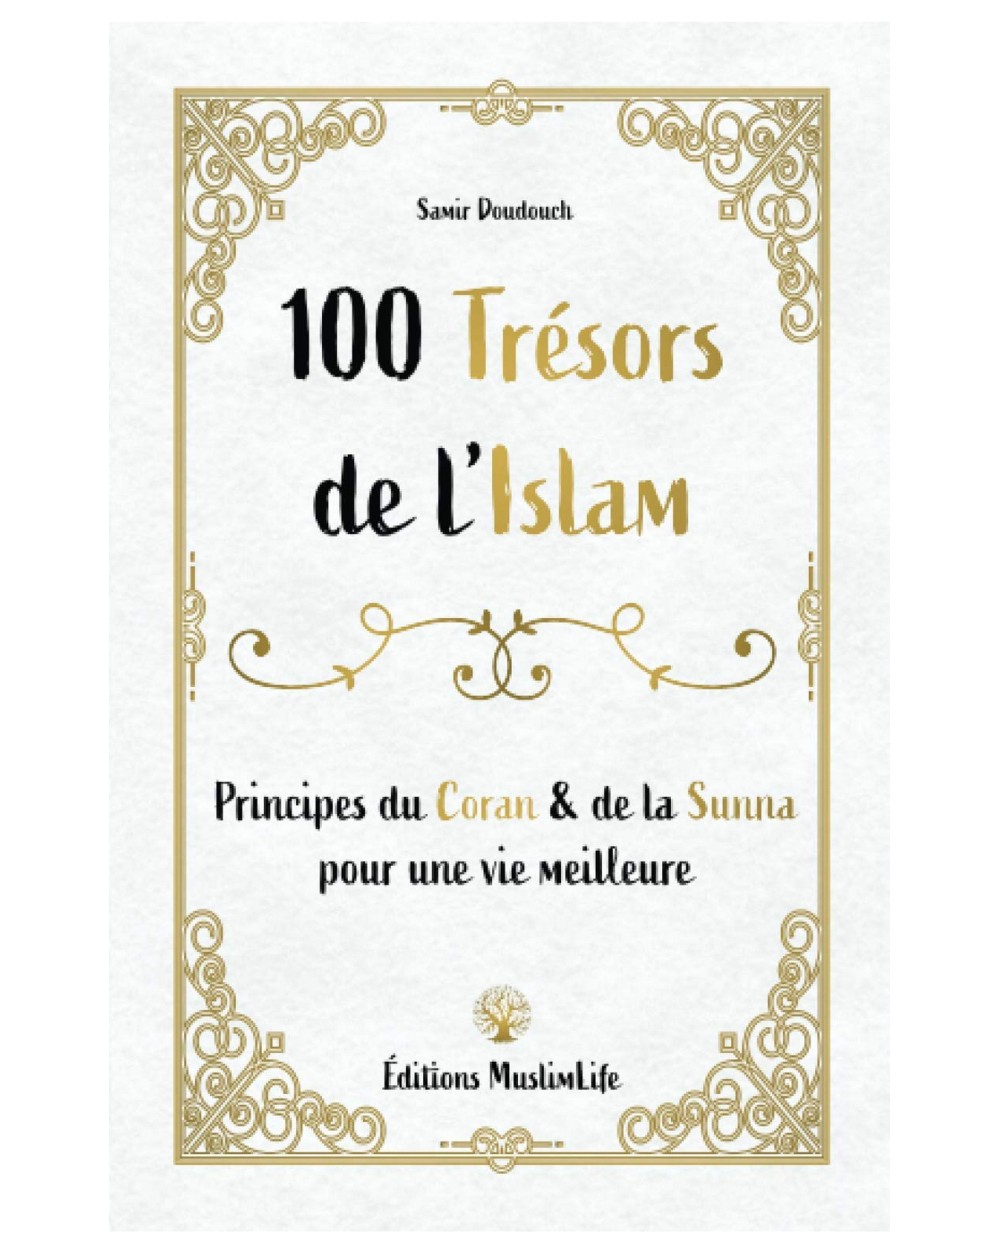 100 Treasures of Islam - Samir Doudouch - Muslimlife Edition